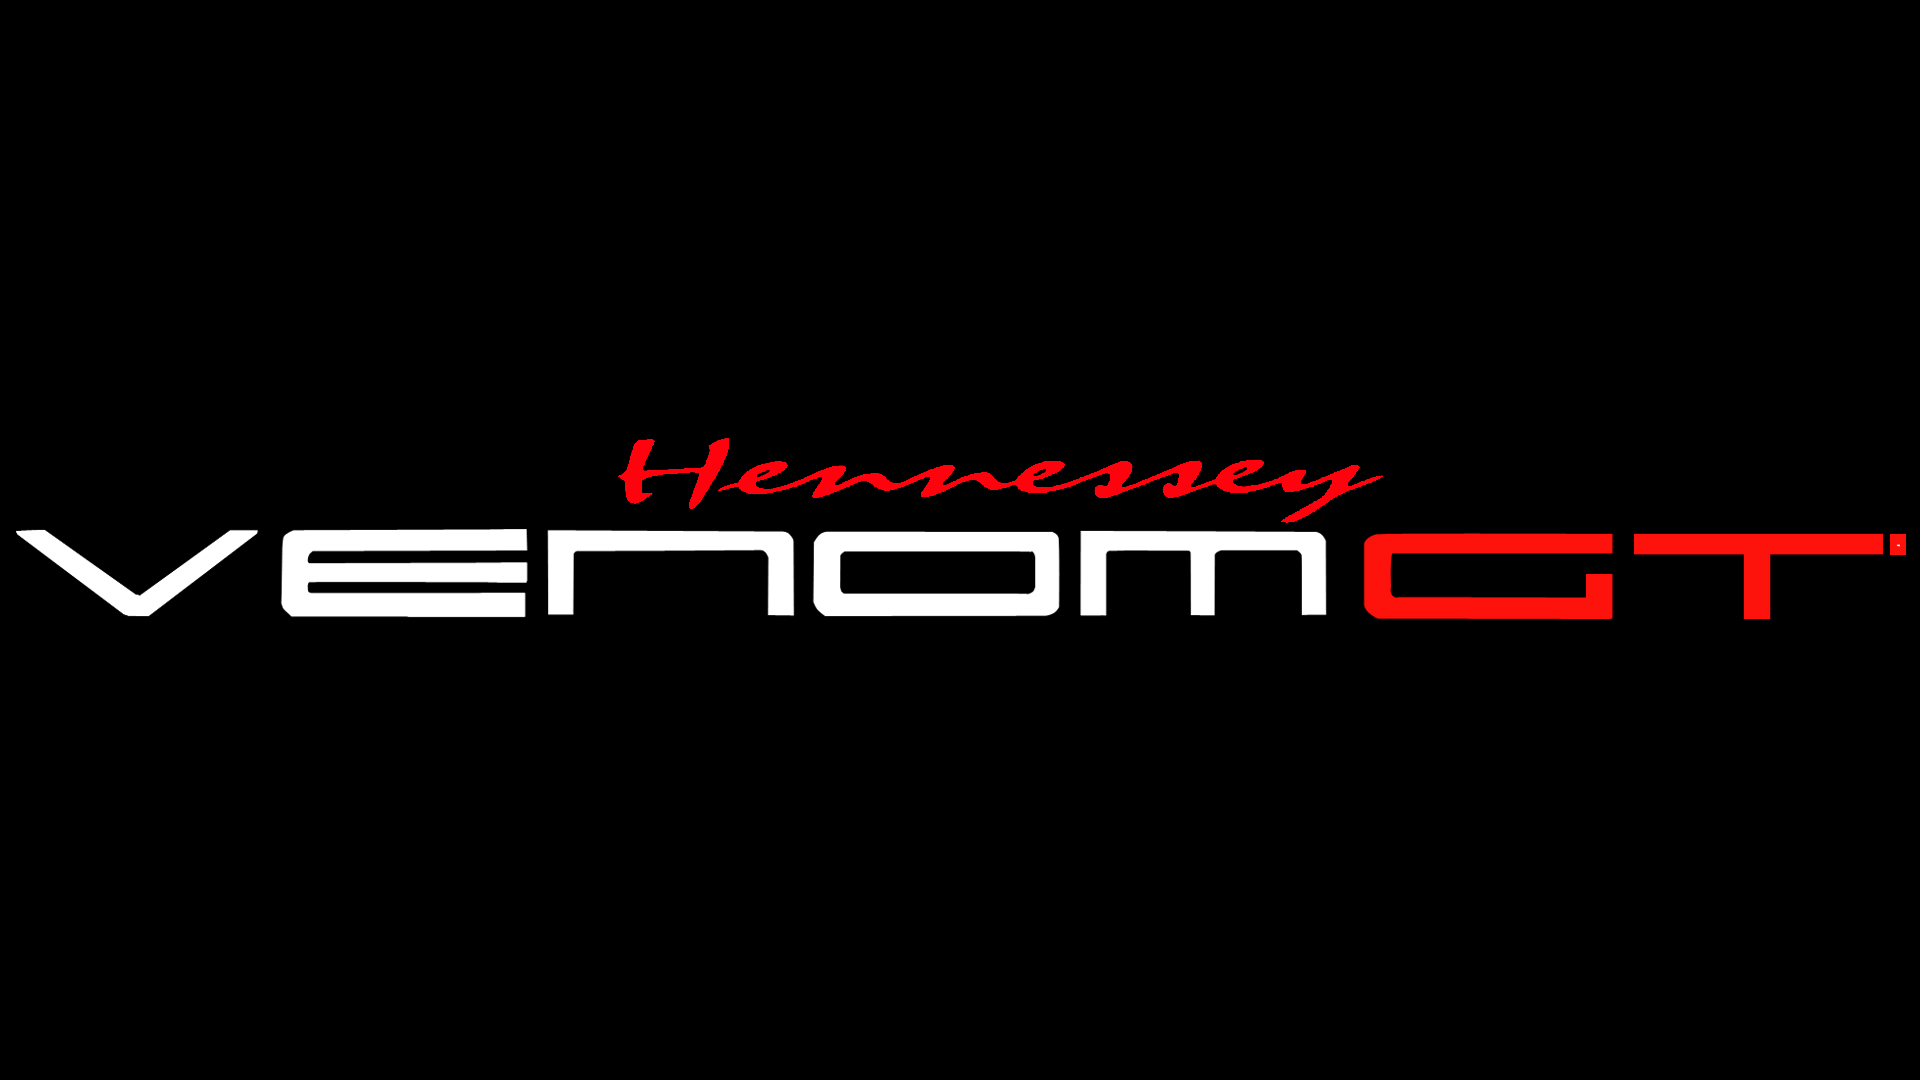 Hennessey Venom Gt Logo HD Wallpaper Cars